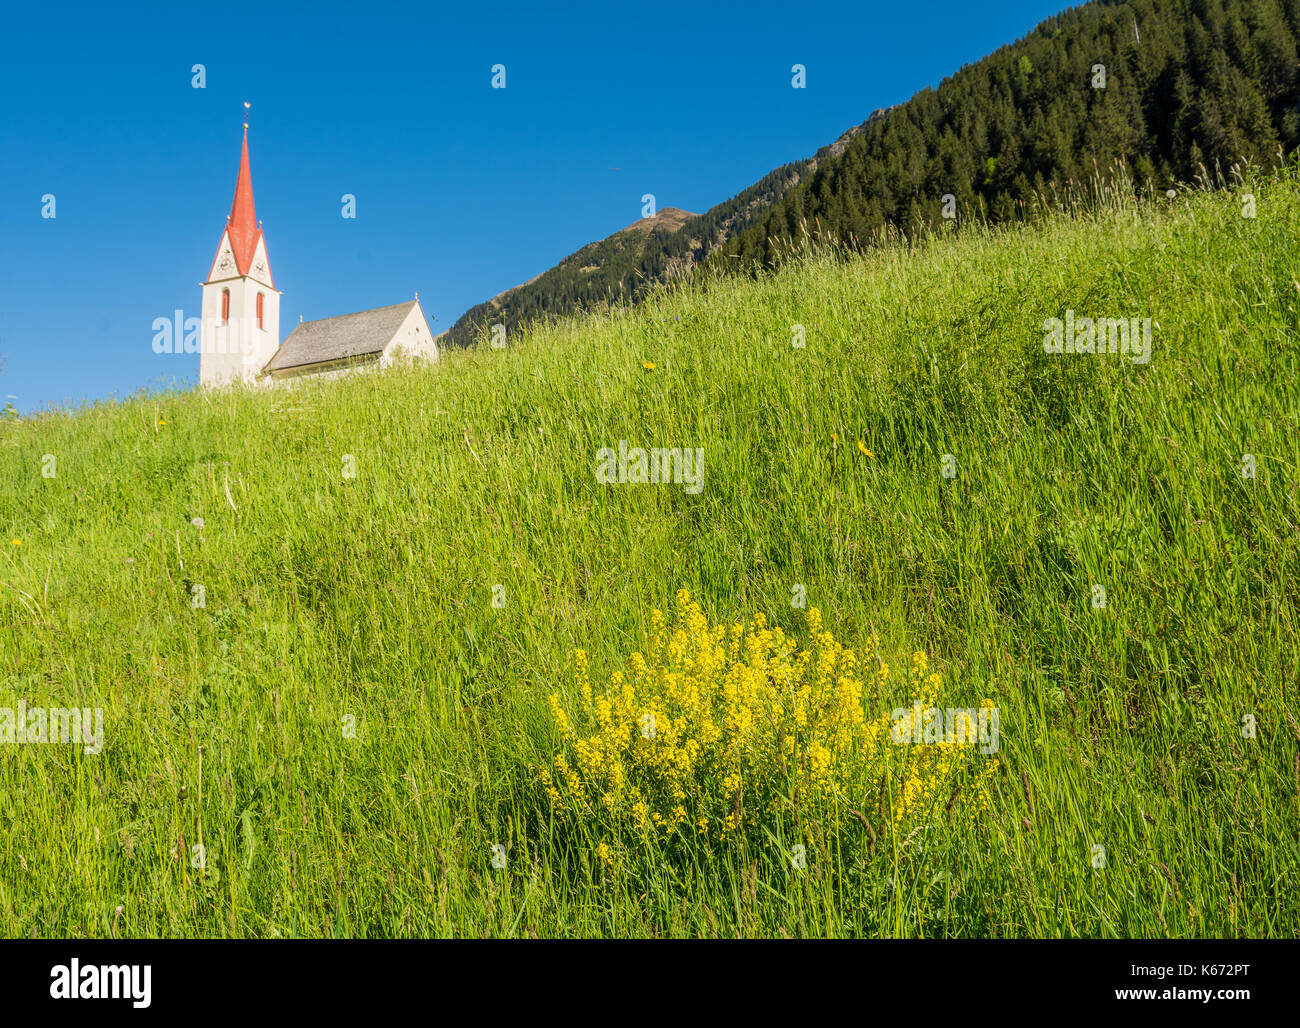 Kirche des Dorfes in Südtirol, Ratschings, Trentino Alto Adige, Italien Stockfoto